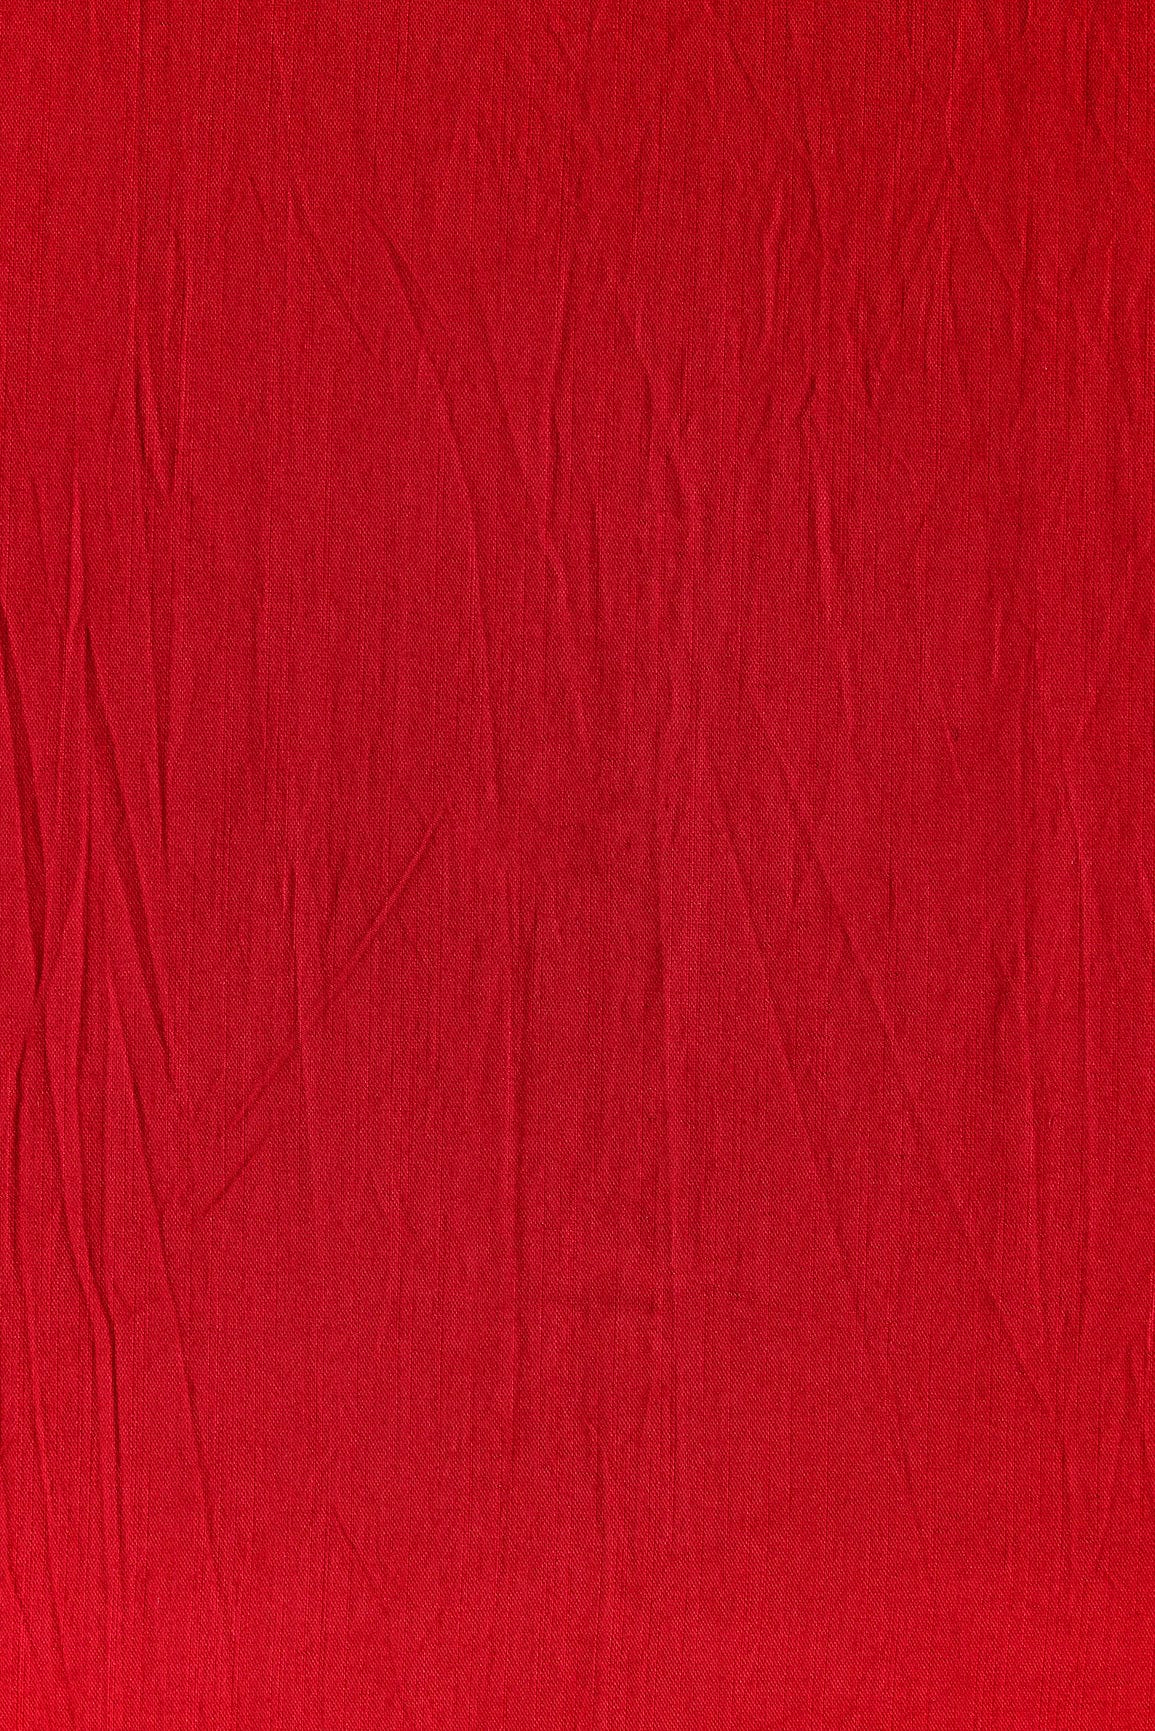 doeraa Plain Fabrics Red Raw Silk Fabric